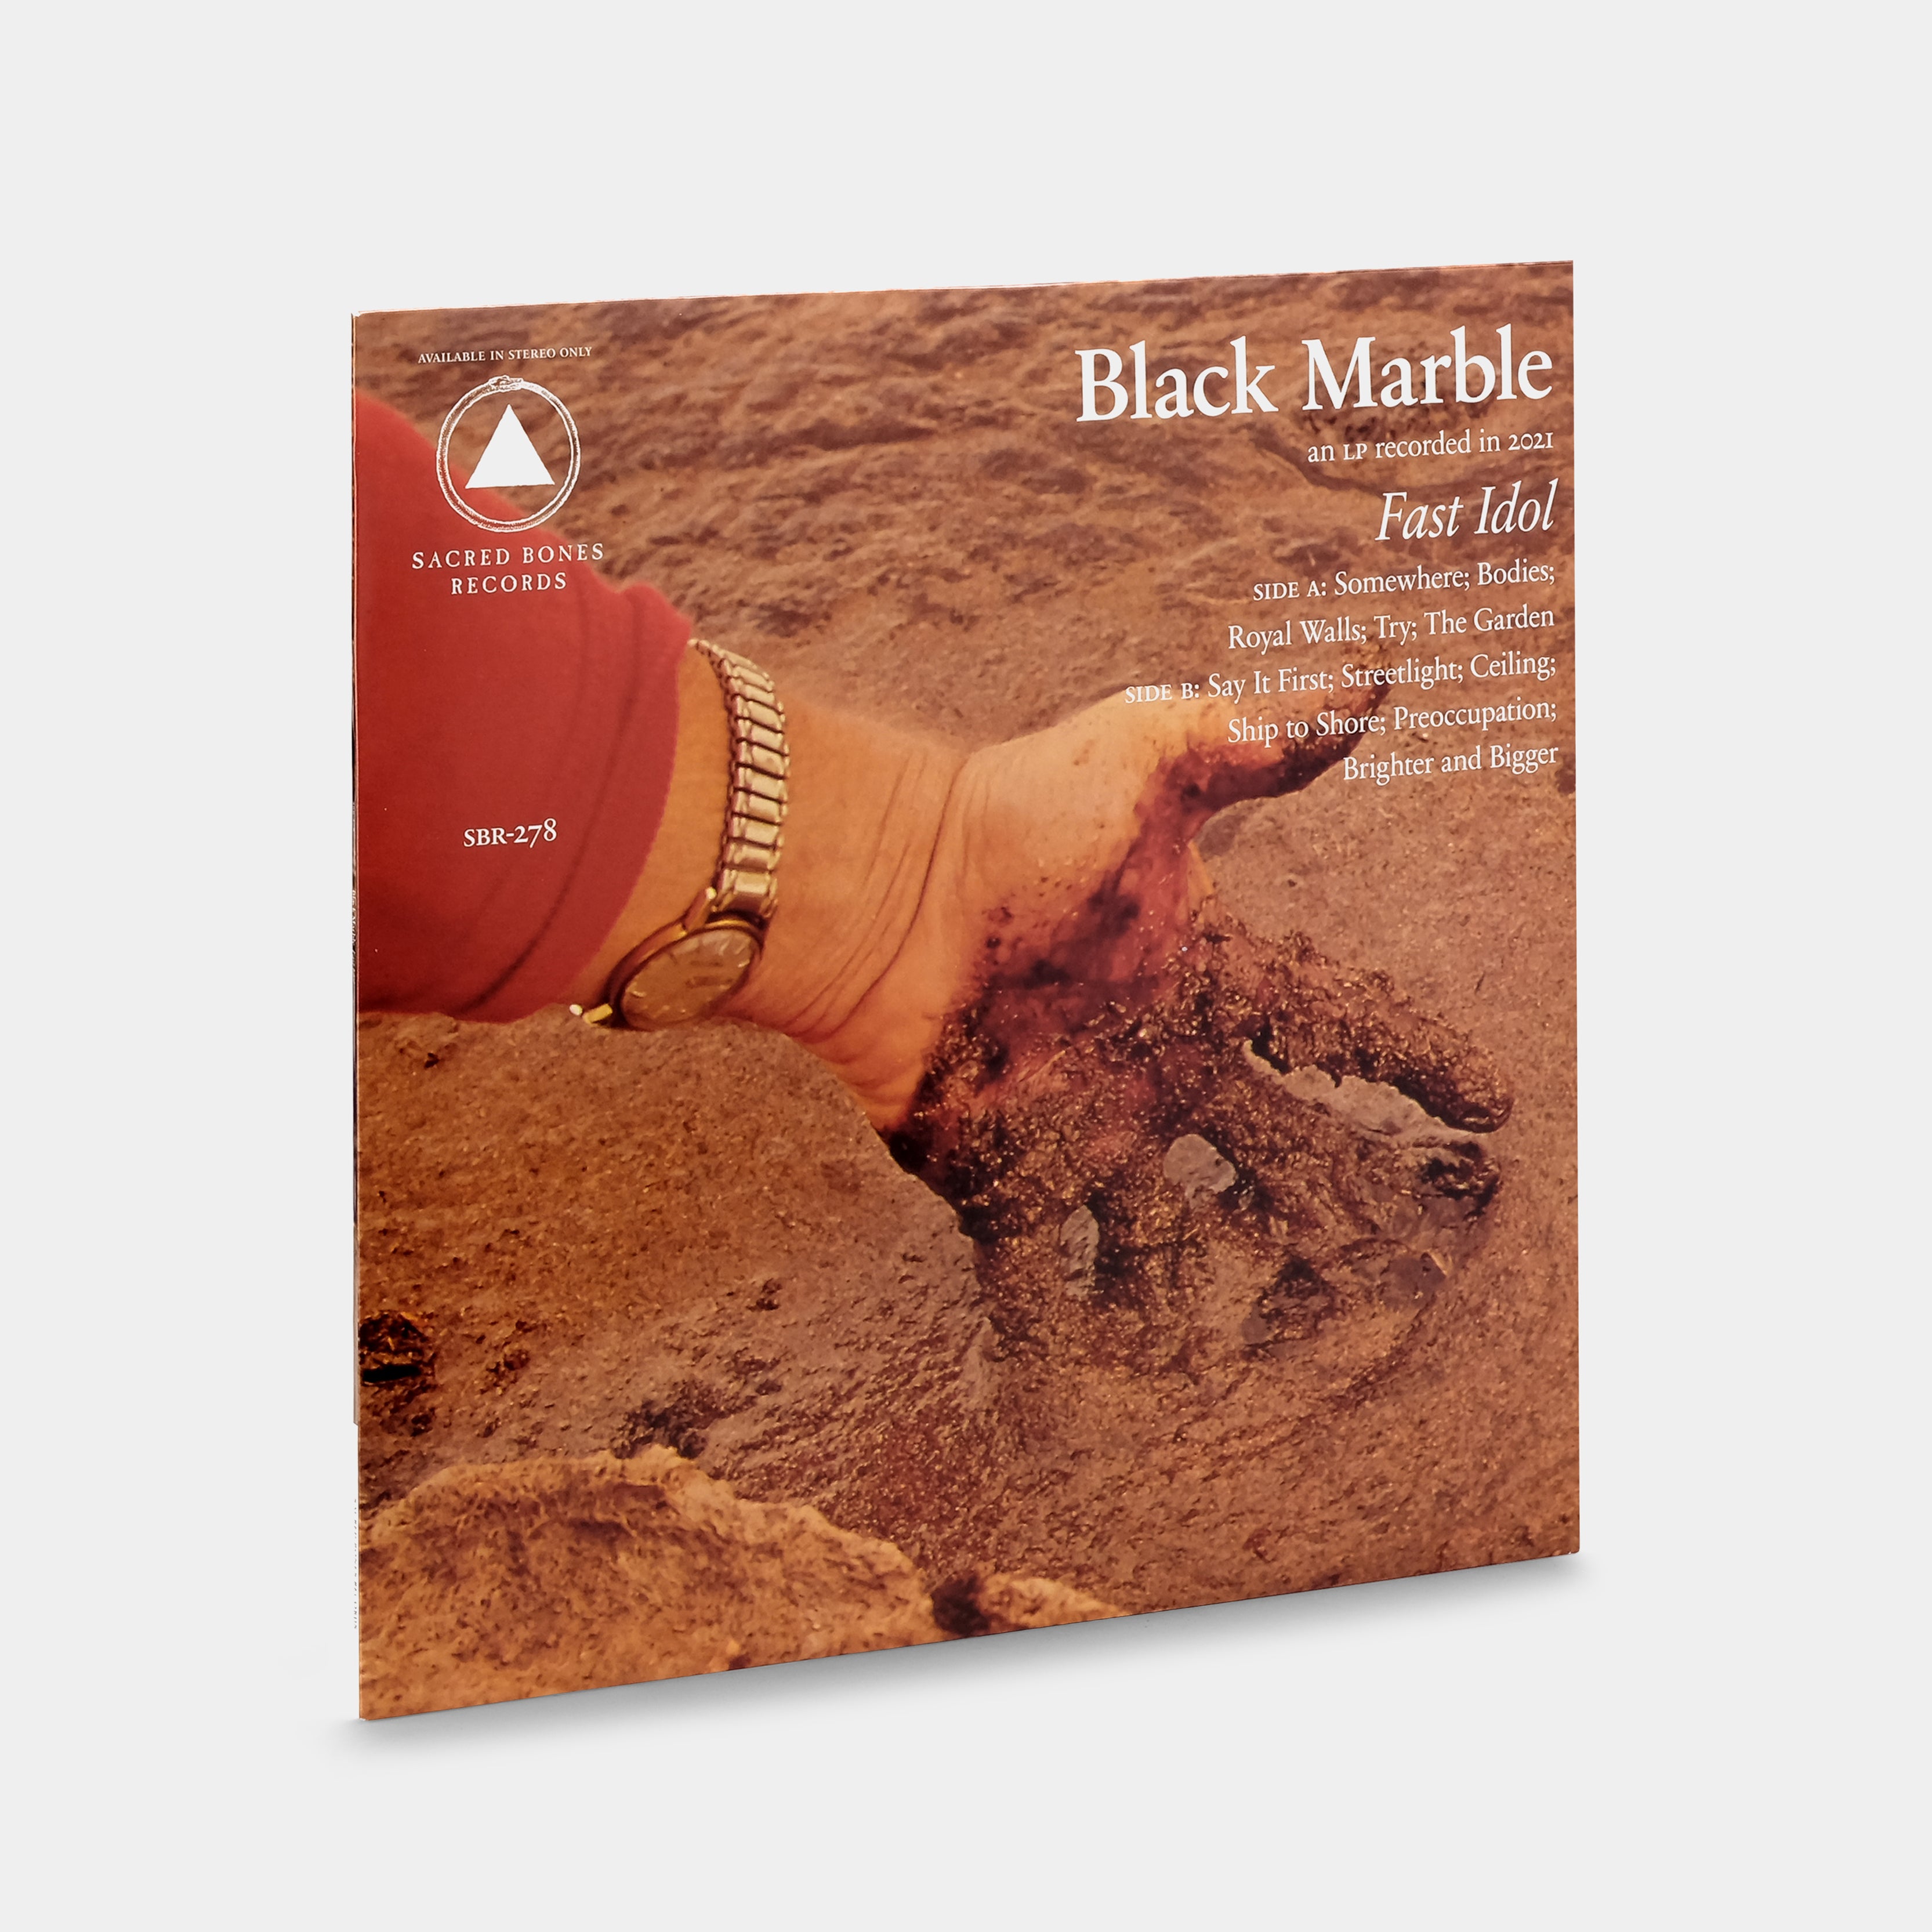 Black Marble - Fast Idol LP Golden Nugget Vinyl Record